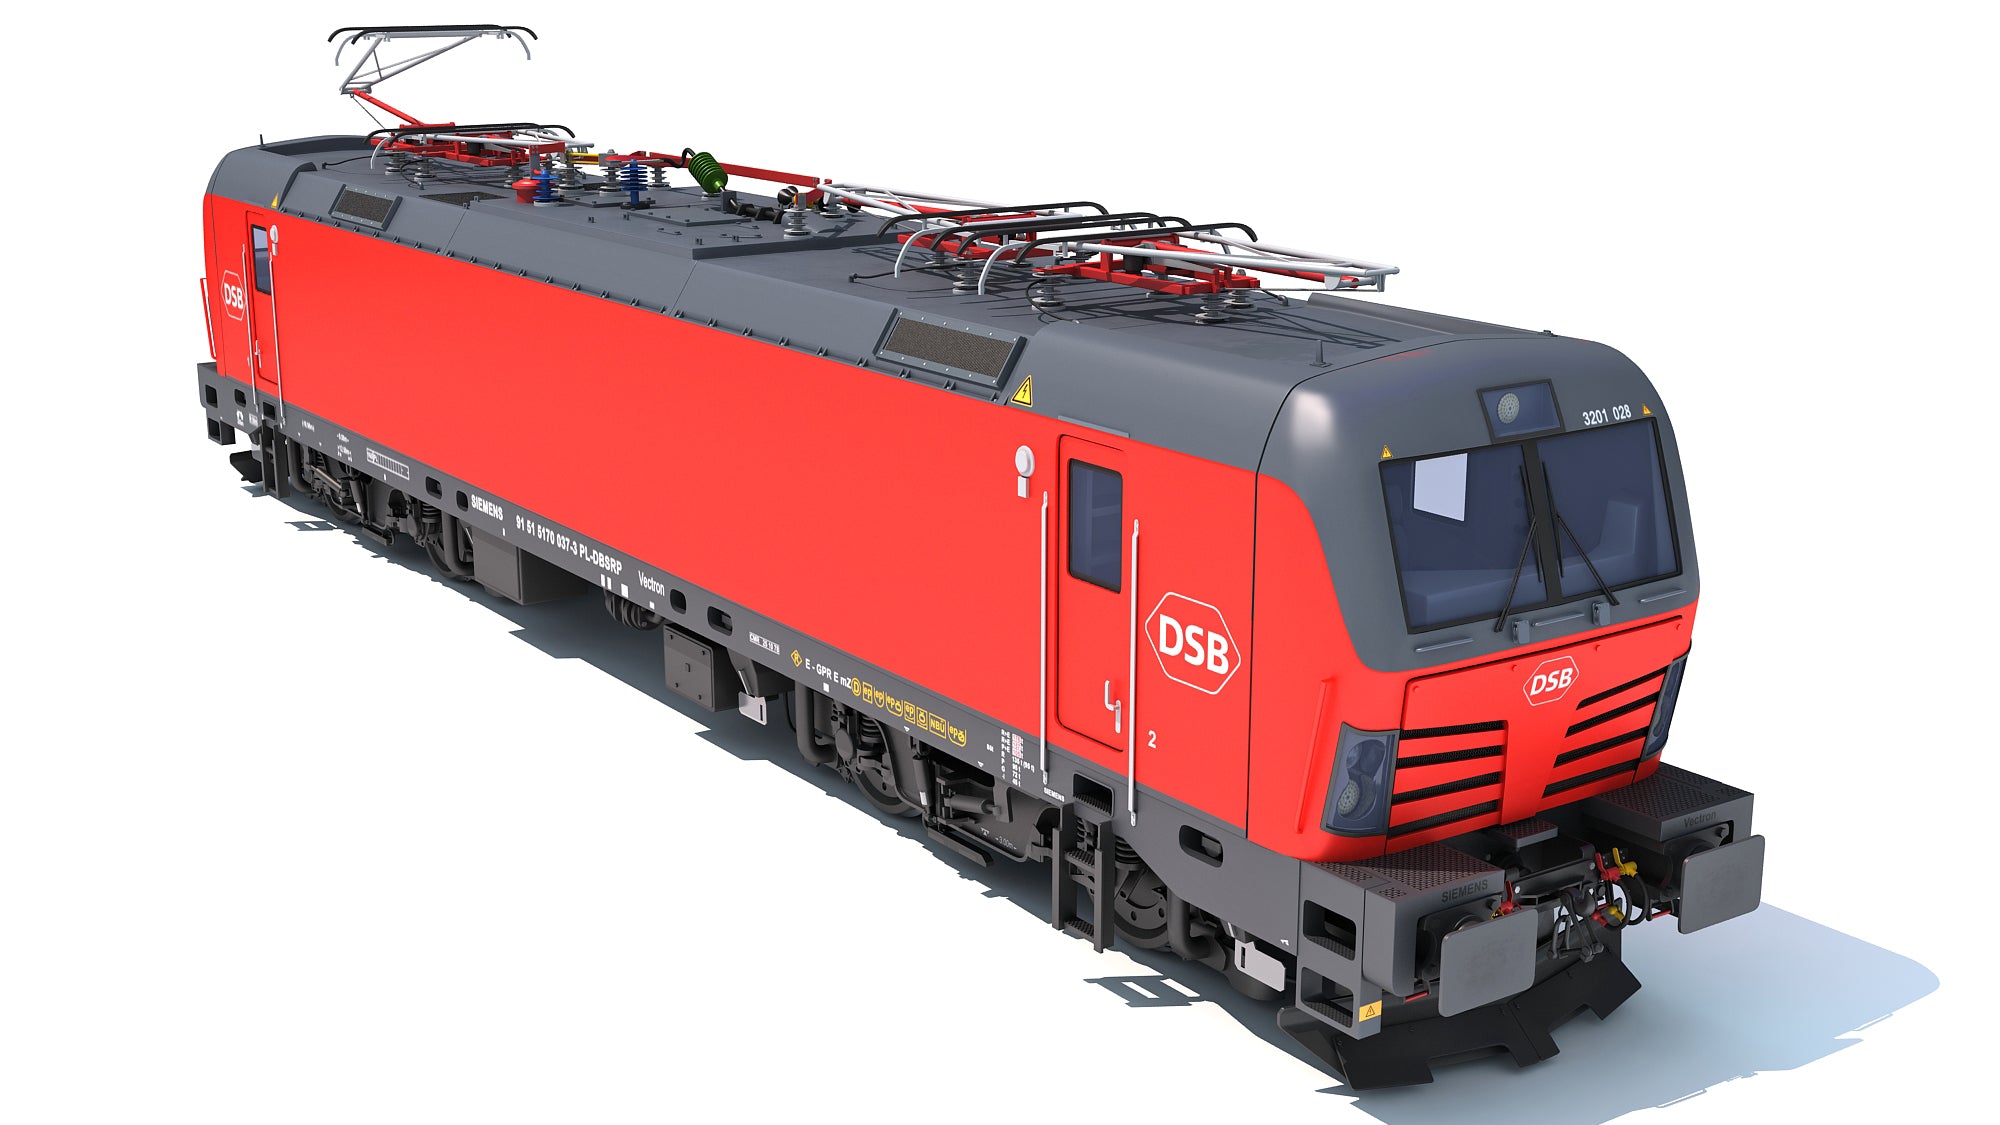 Siemens Vectron Danish Railways DSB